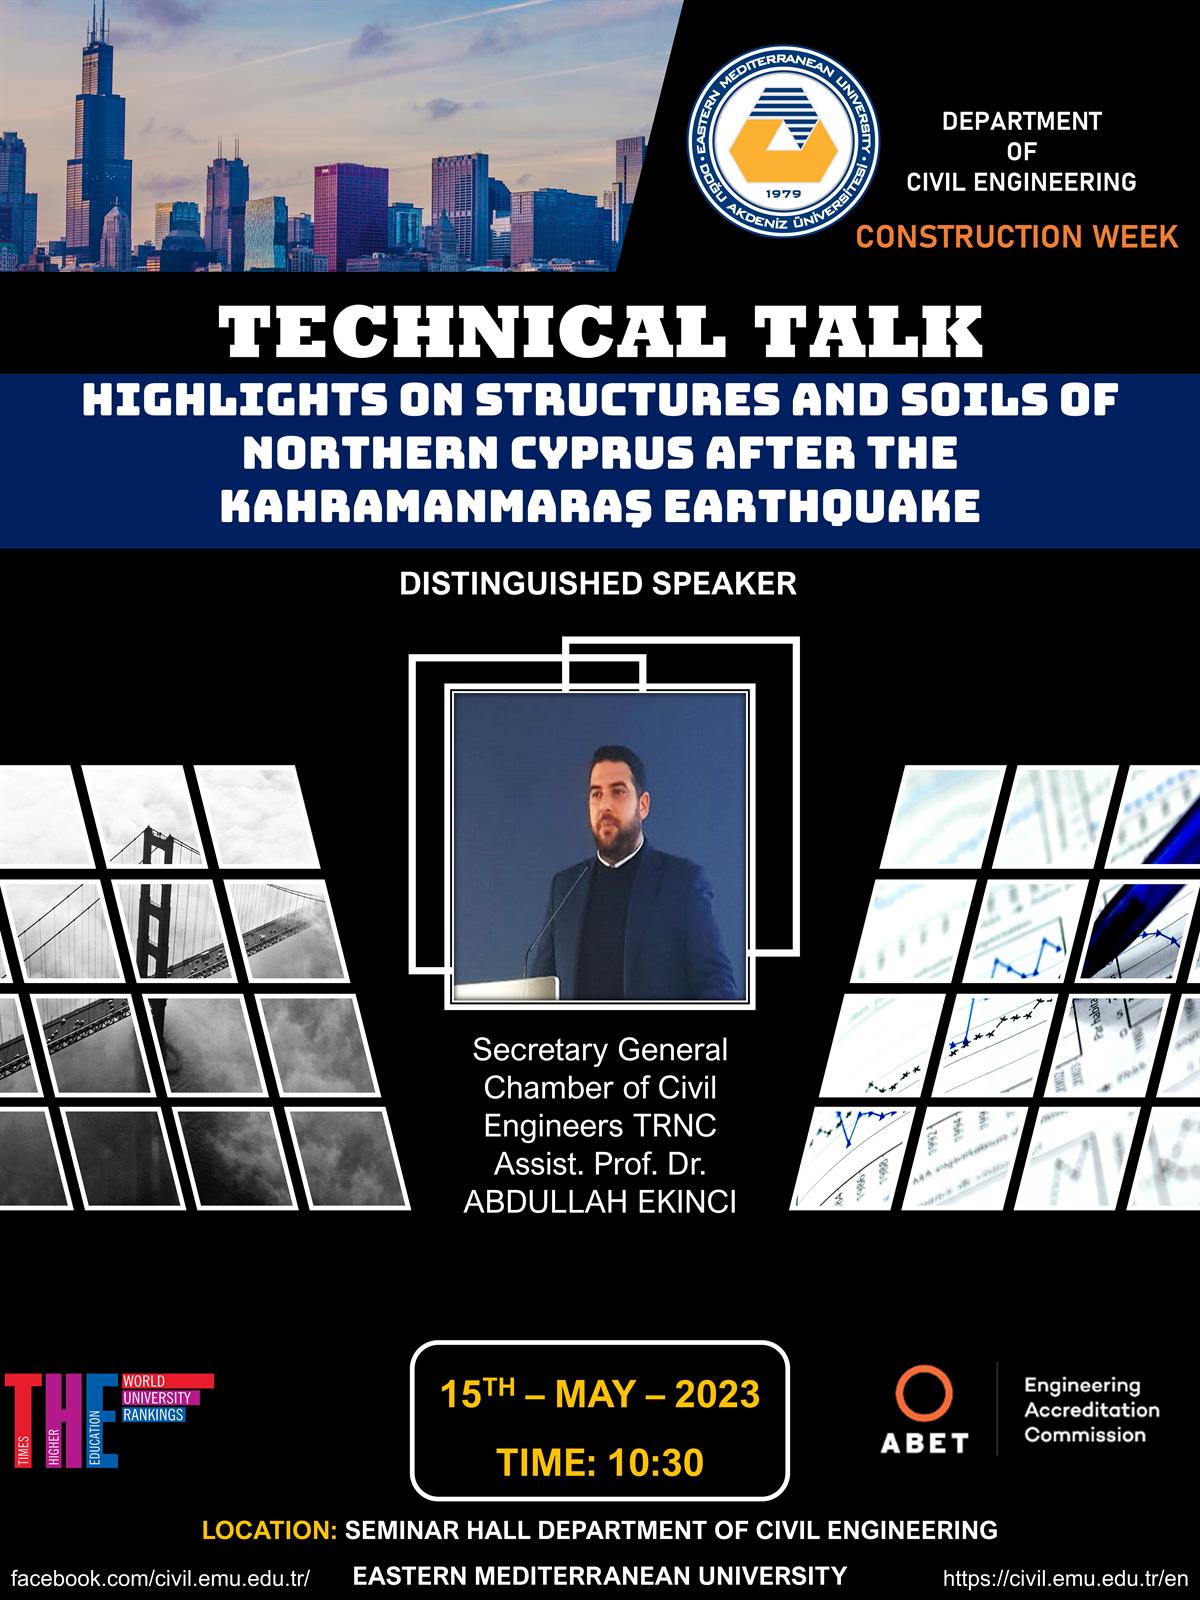 Technical Talk by Assistant Professor Dr. Abdullah Ekinci